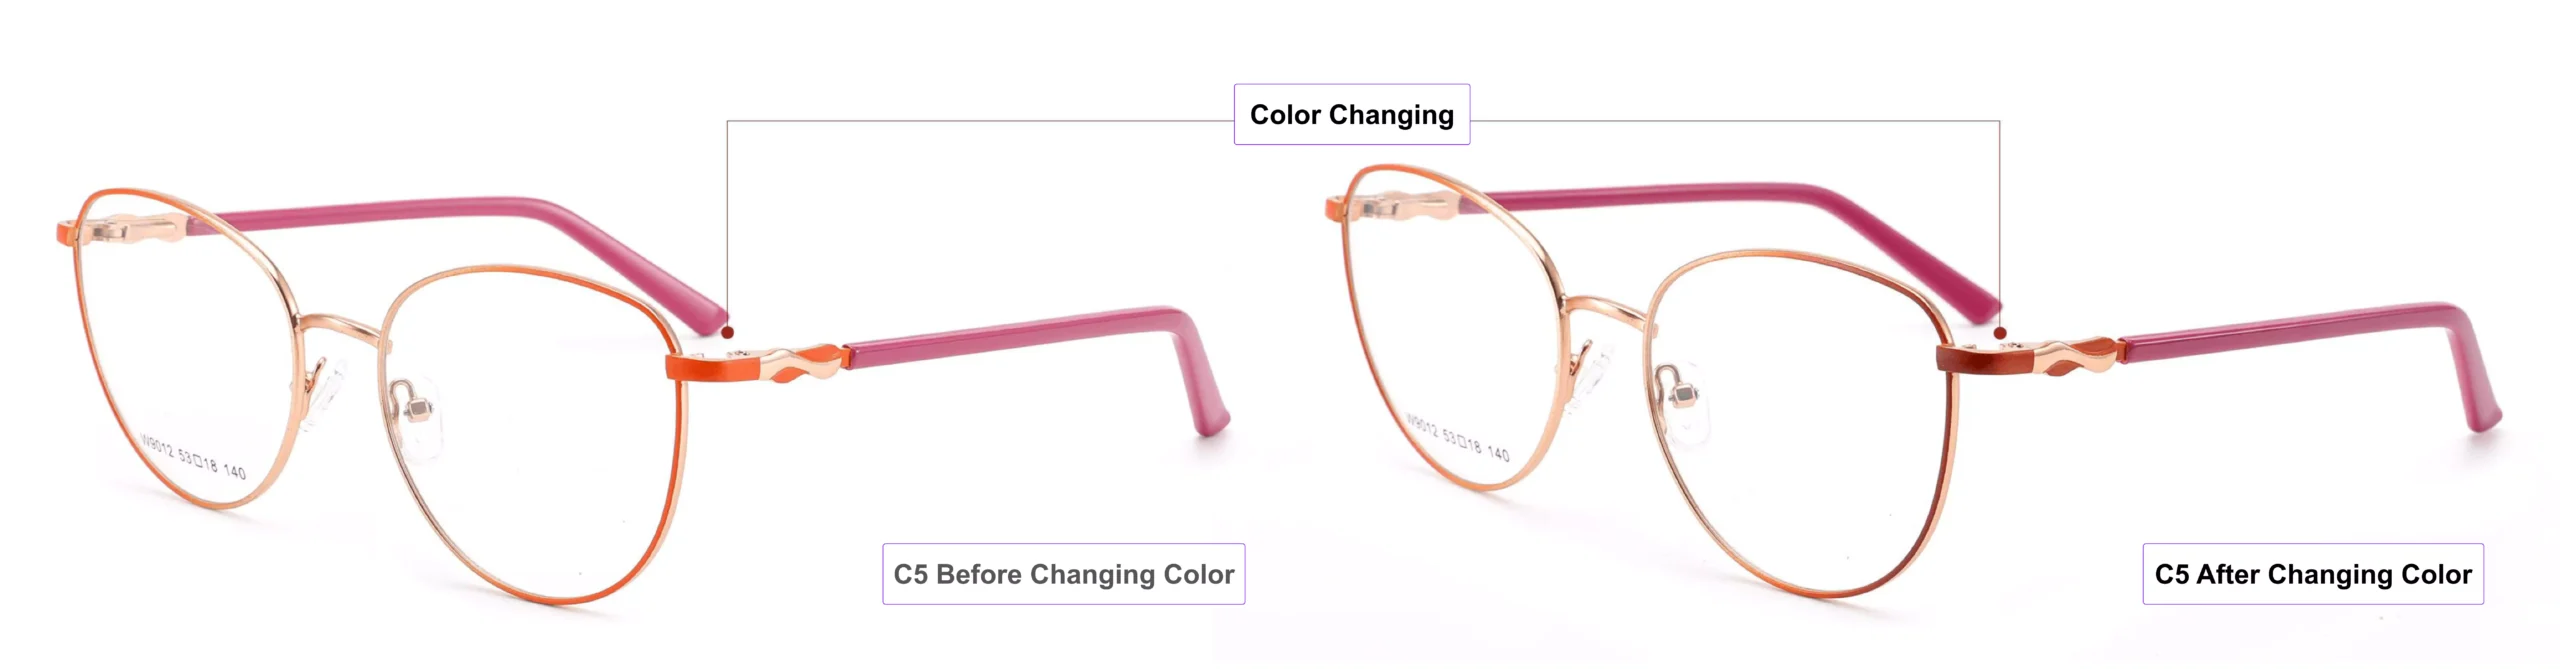 Color Changing Glasses Frames, orange, pink gold, bright red, burgundy, process of glasses color changing